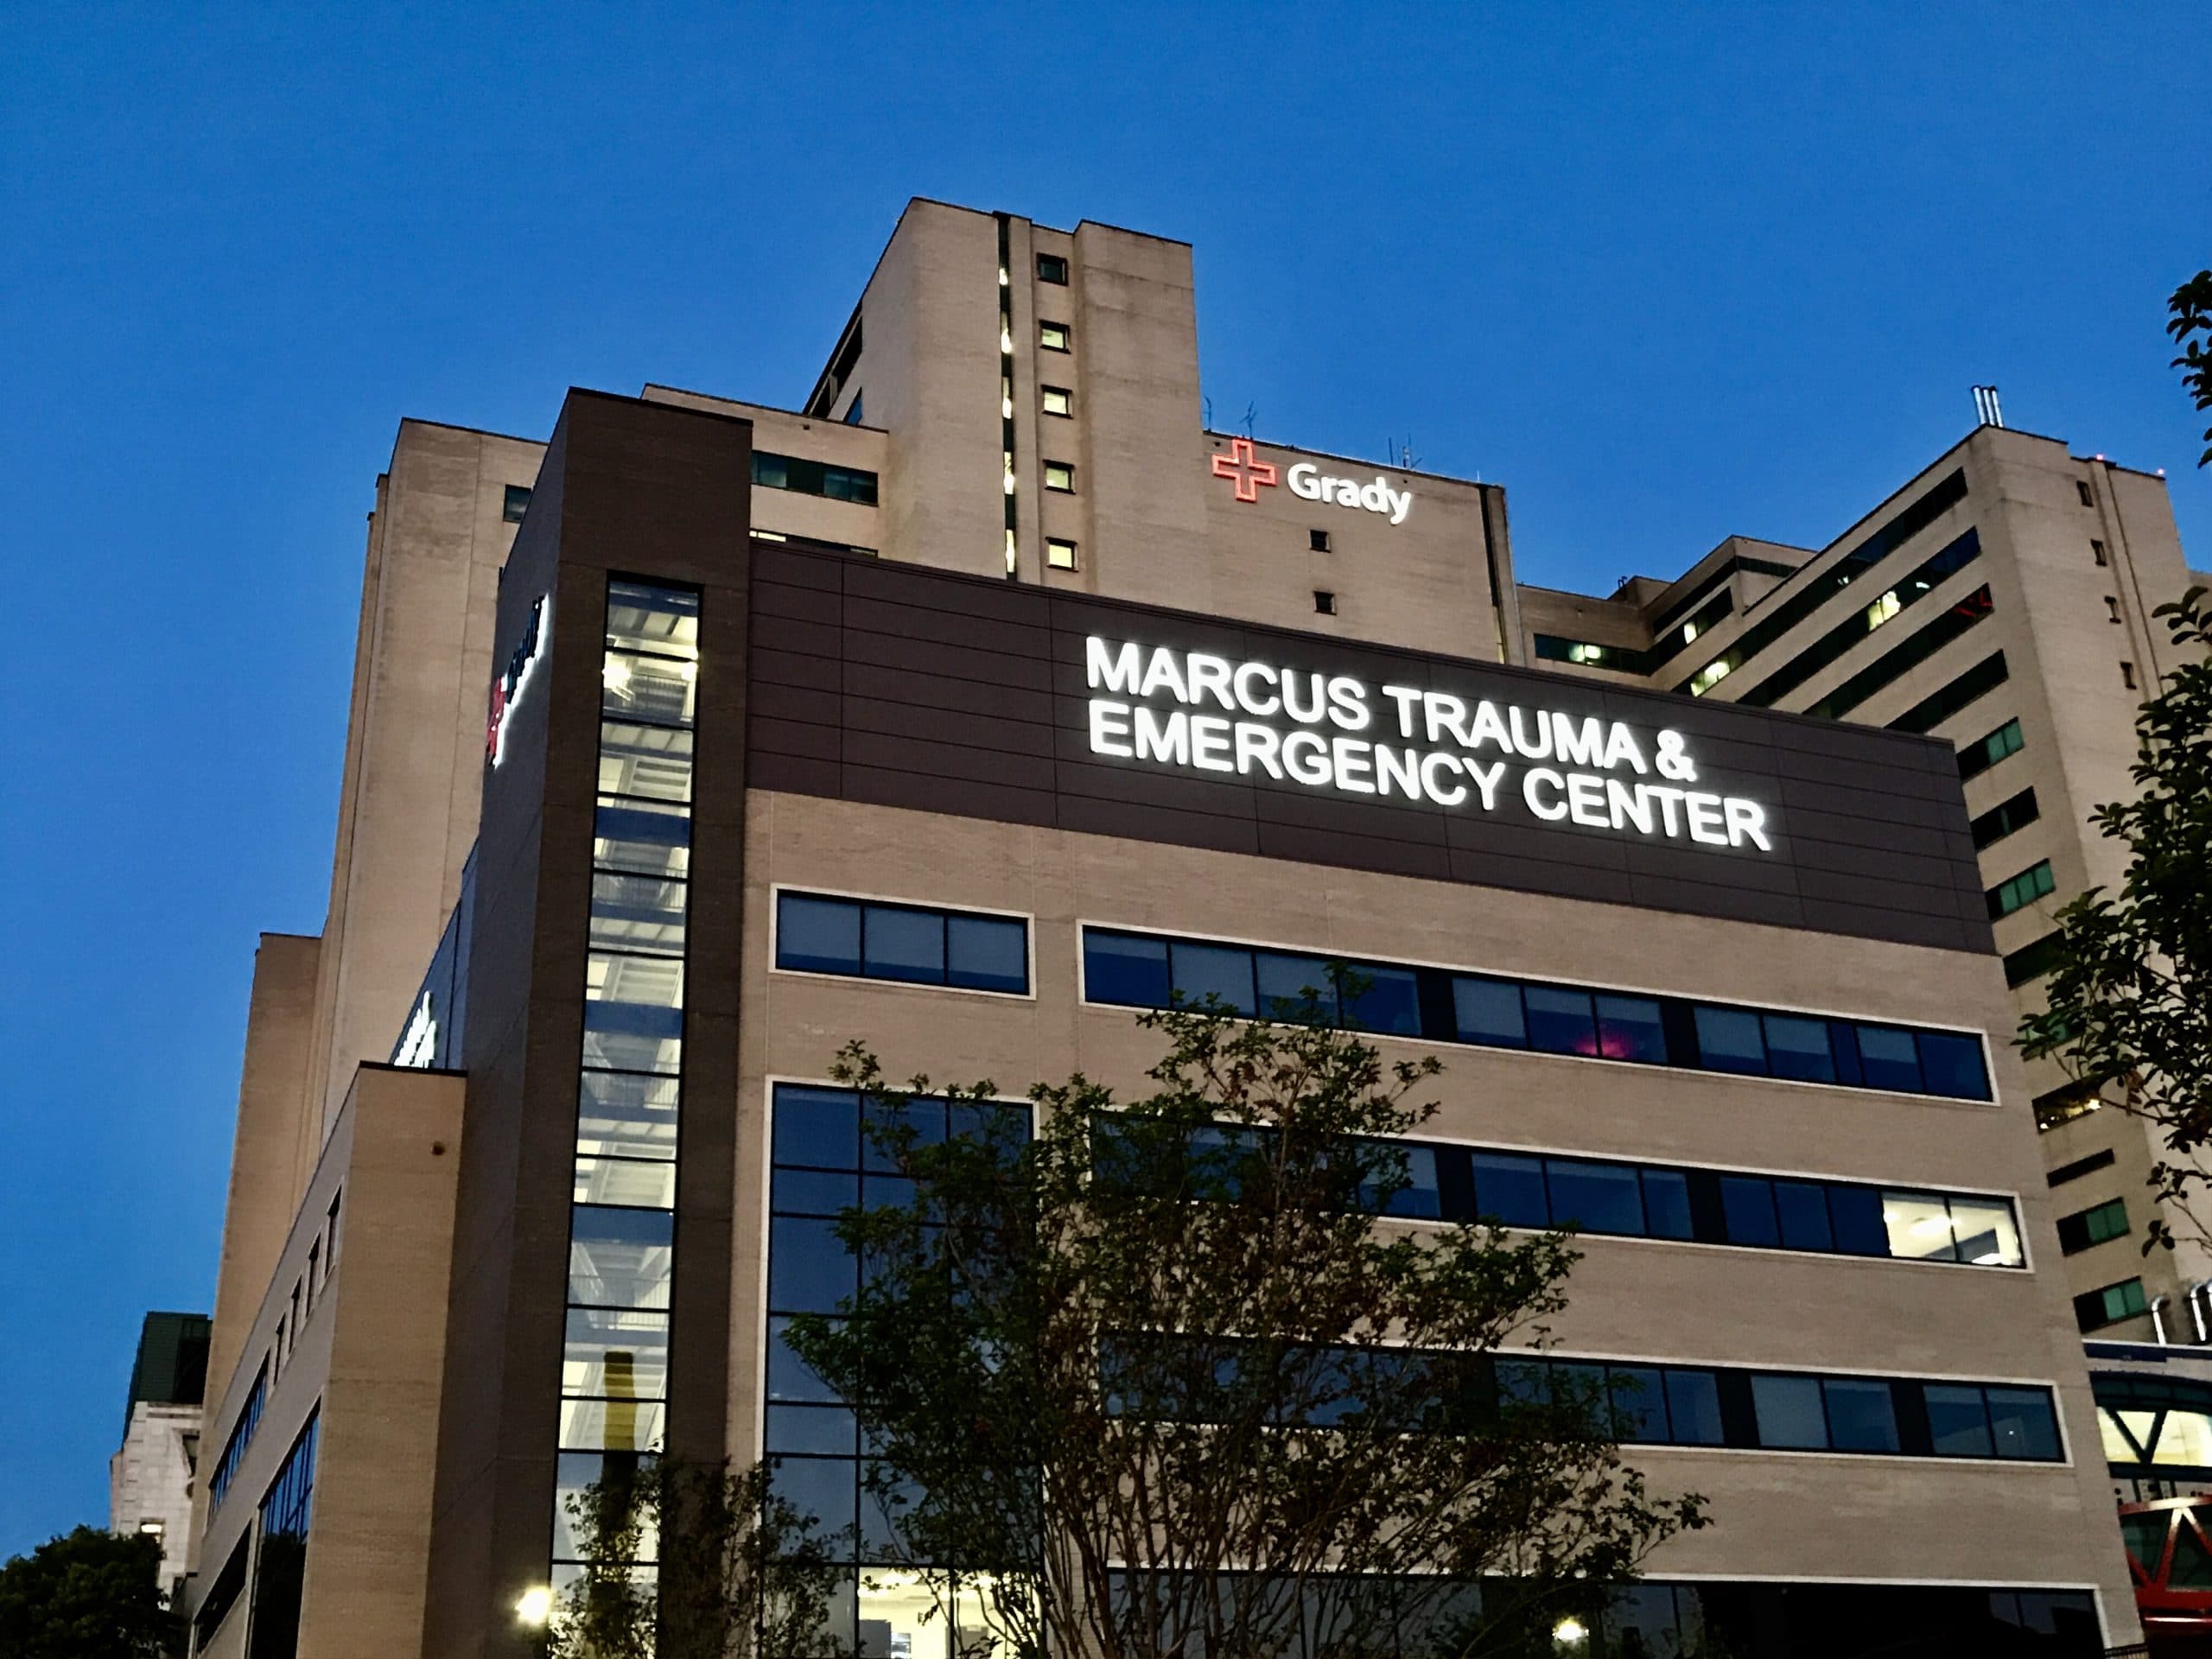 Grady Marcus Trauma and Emergency Center